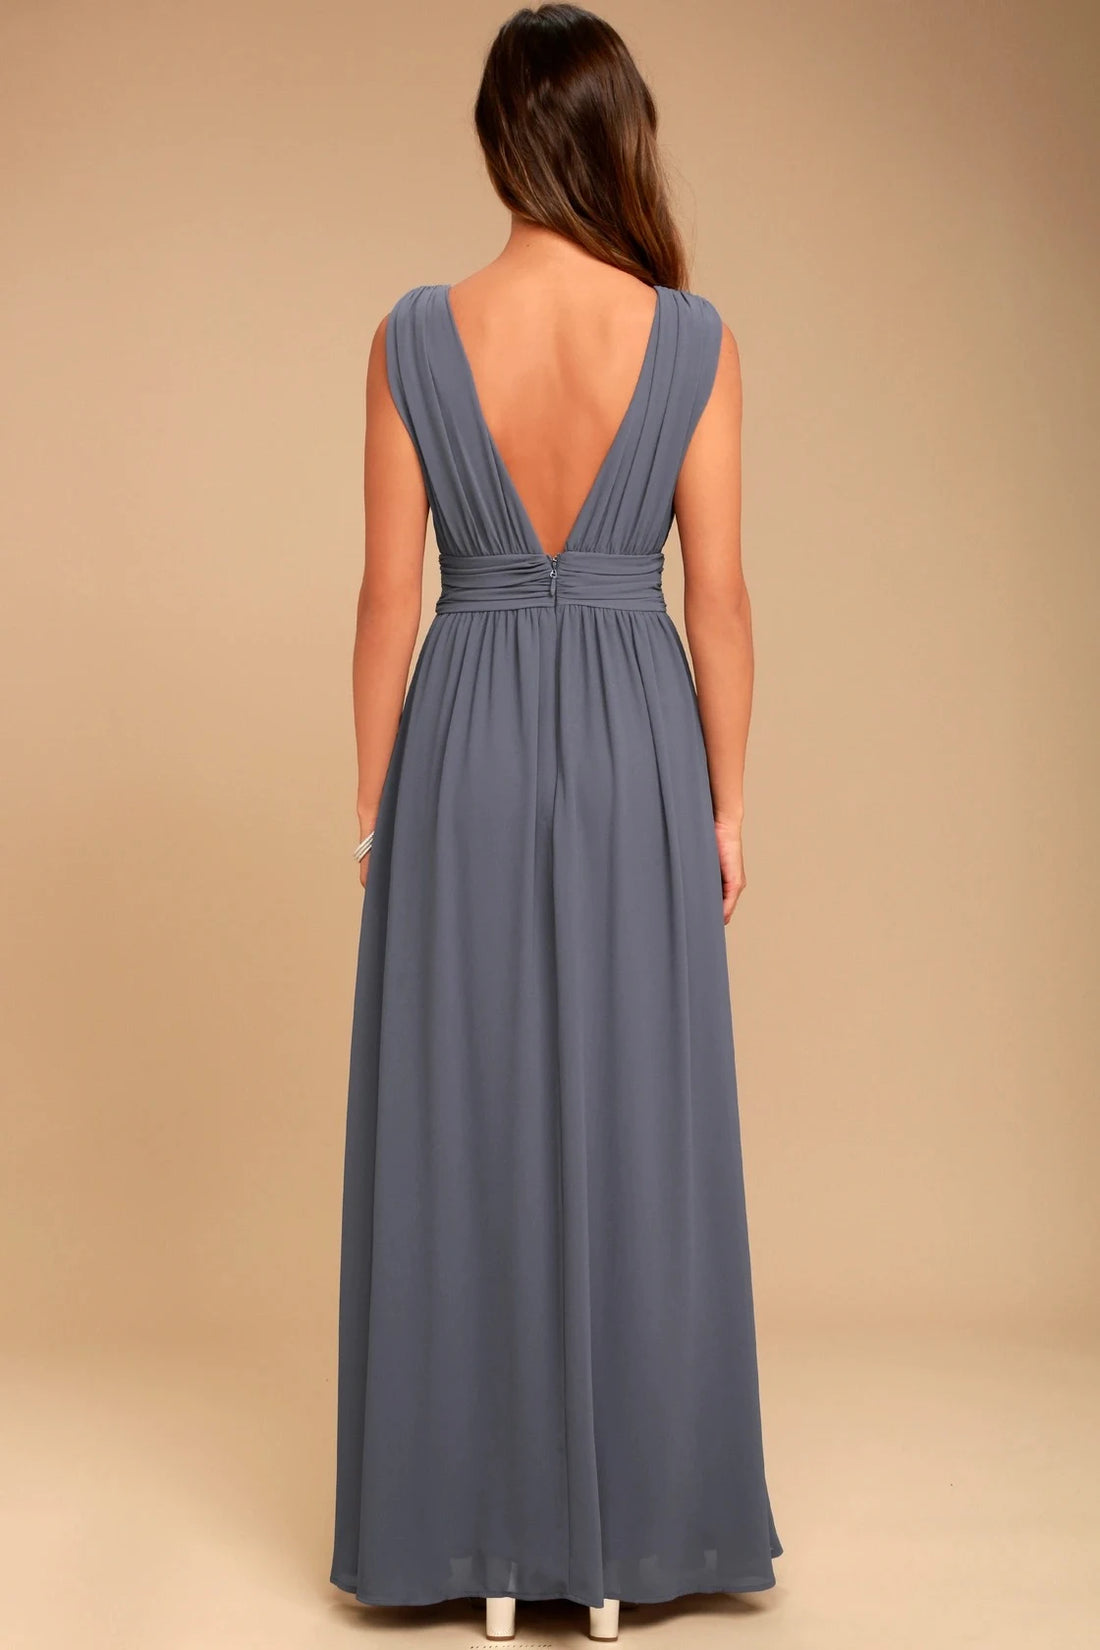 [Draft] Lulus Heavenly Hues Denim Blue Maxi Dress - Studio Mariée